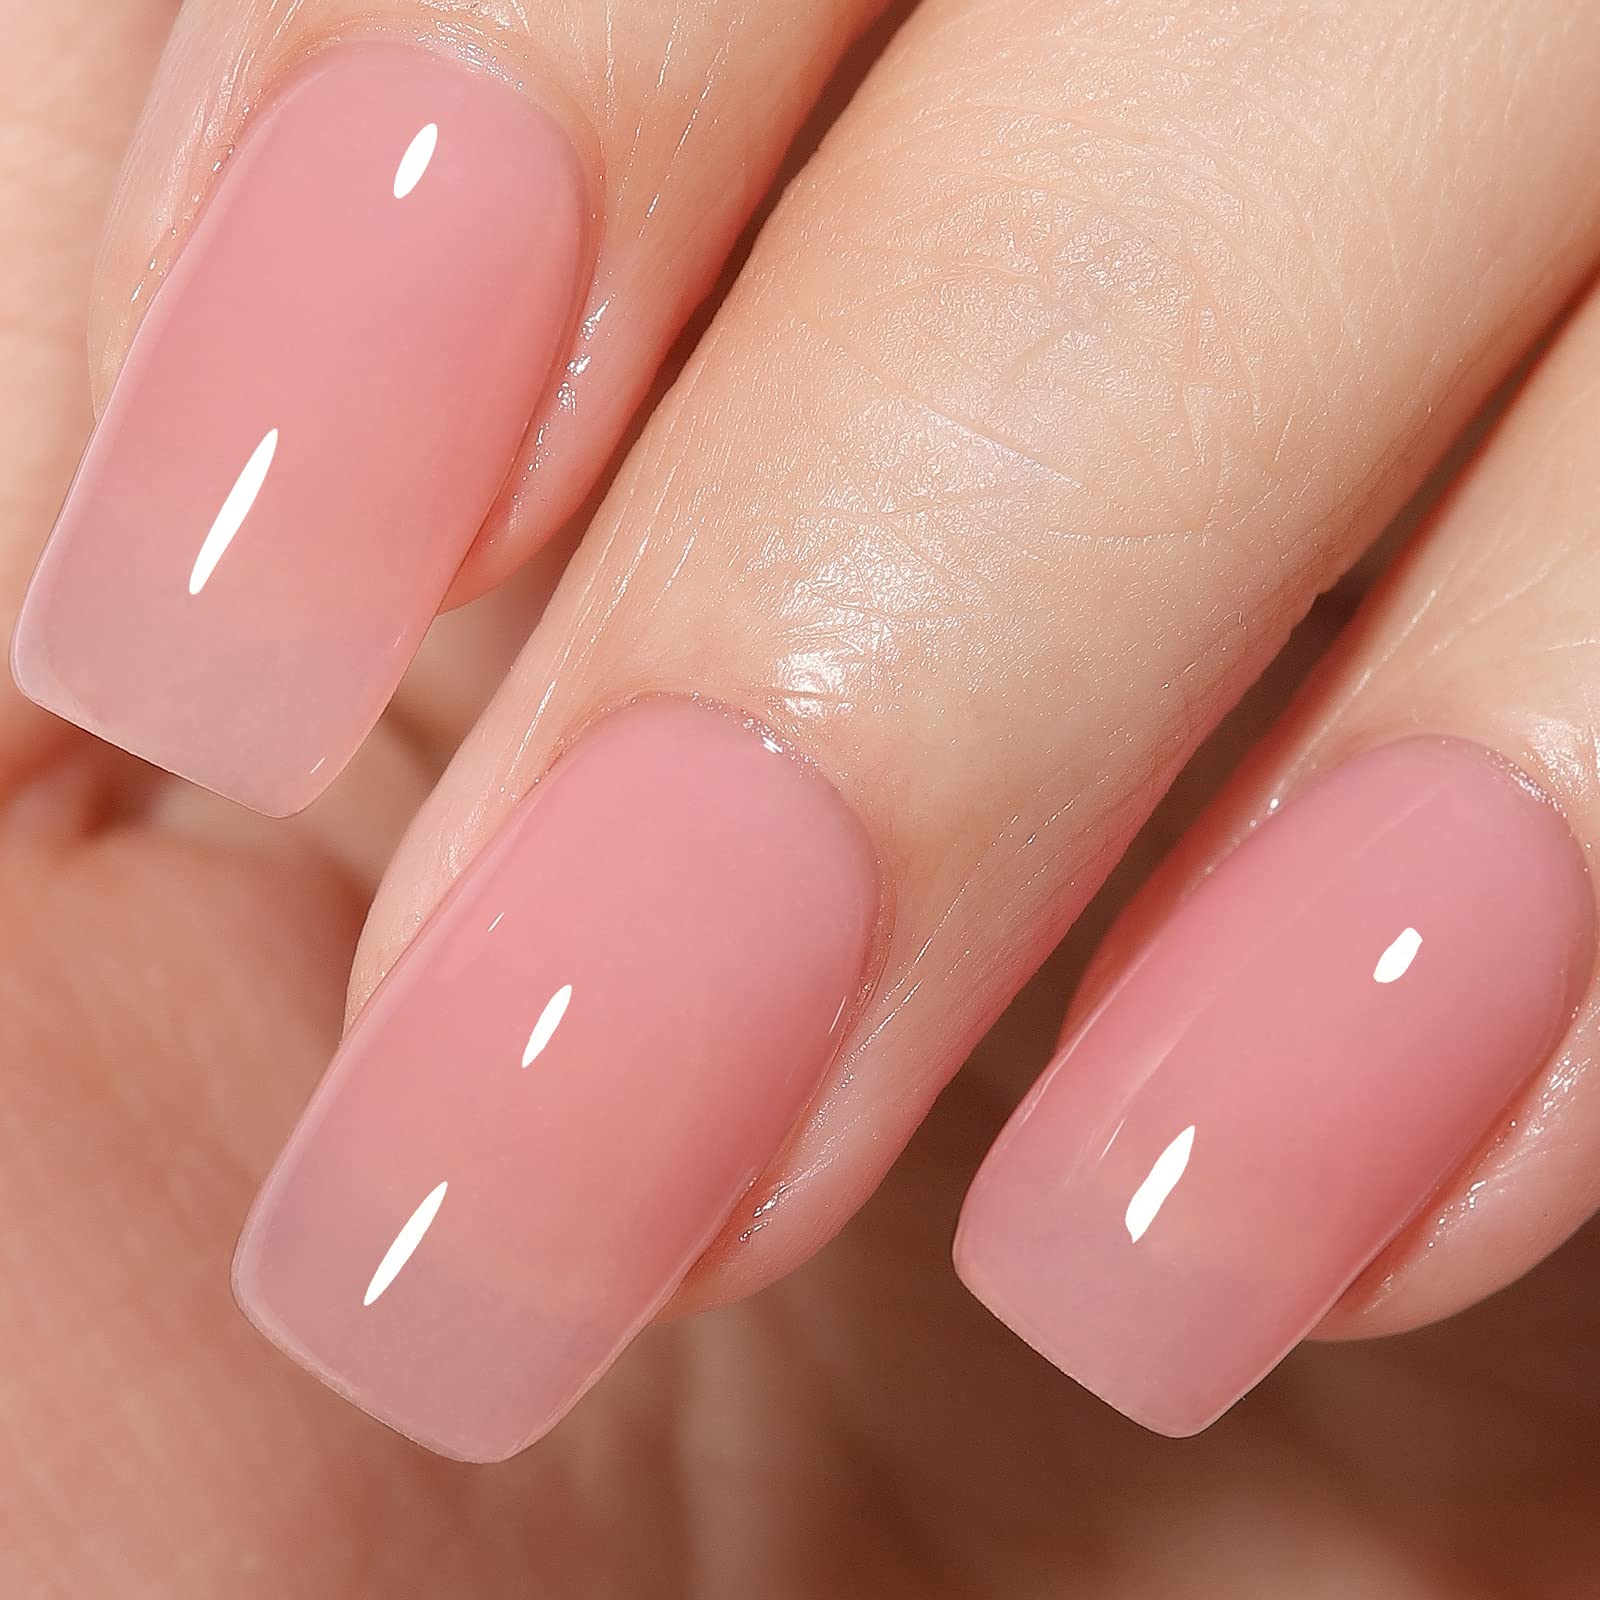 AILLSA Nude Gel Polish - Jelly Gel Nail Polish Sheer Pink